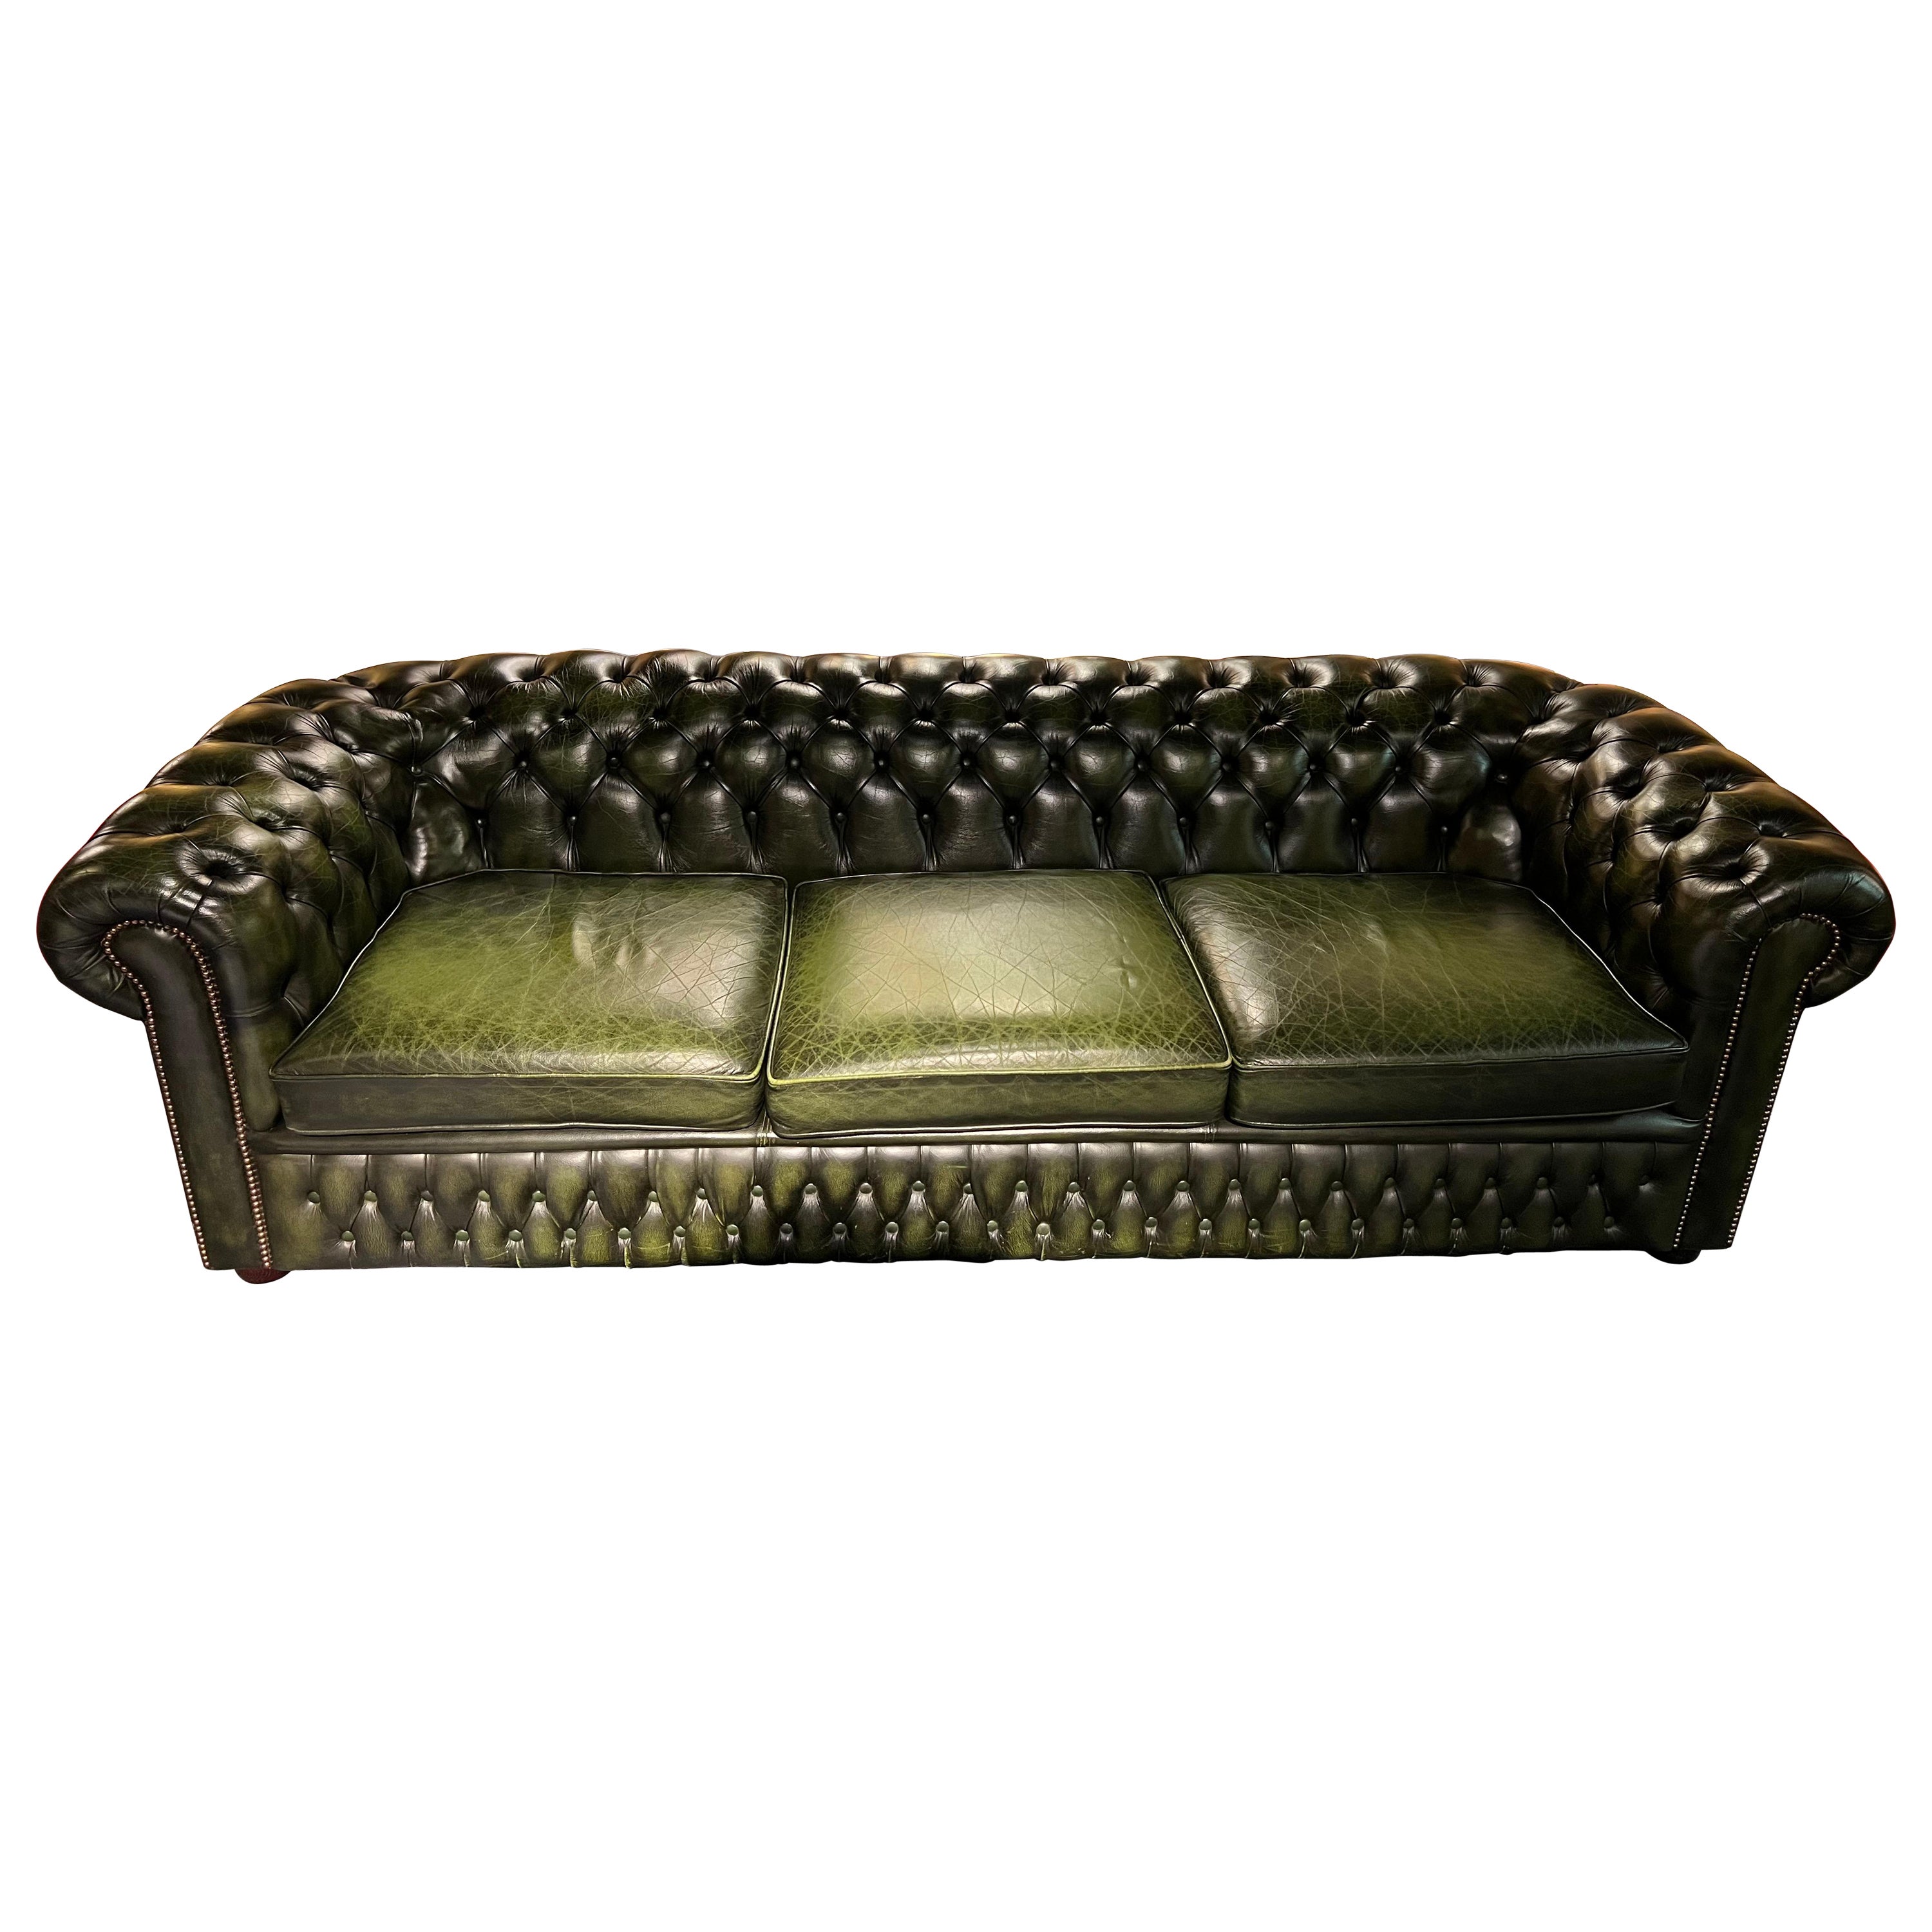 Original vintage English Dark Green Chesterfield Leather Windsor 4-Seater Sofa